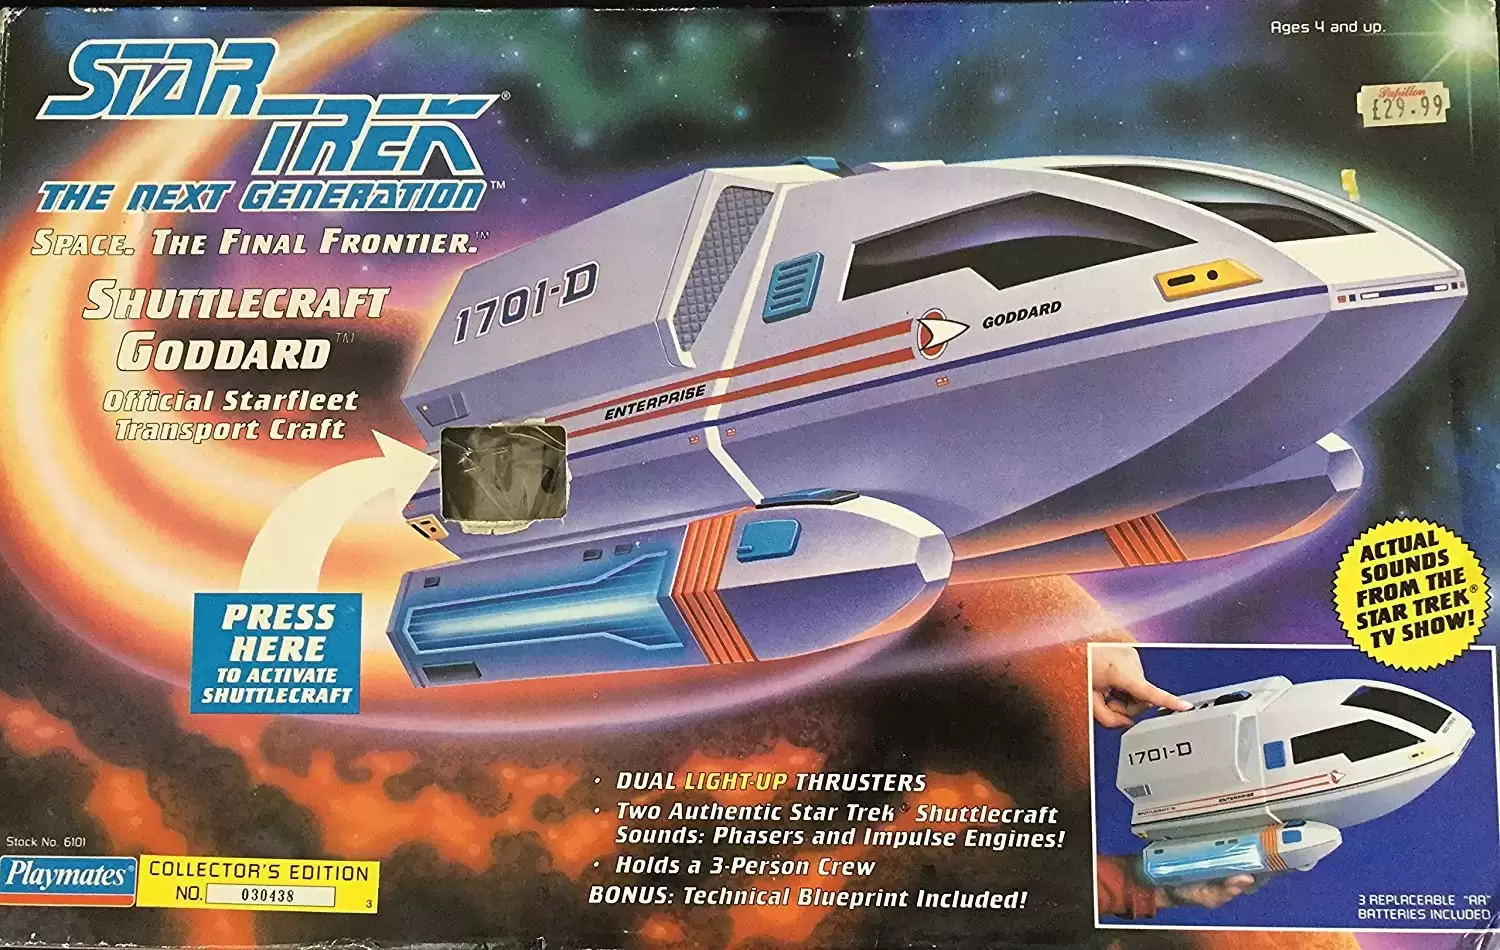 Star Trek The Next Generation - Shuttlecraft Goddard